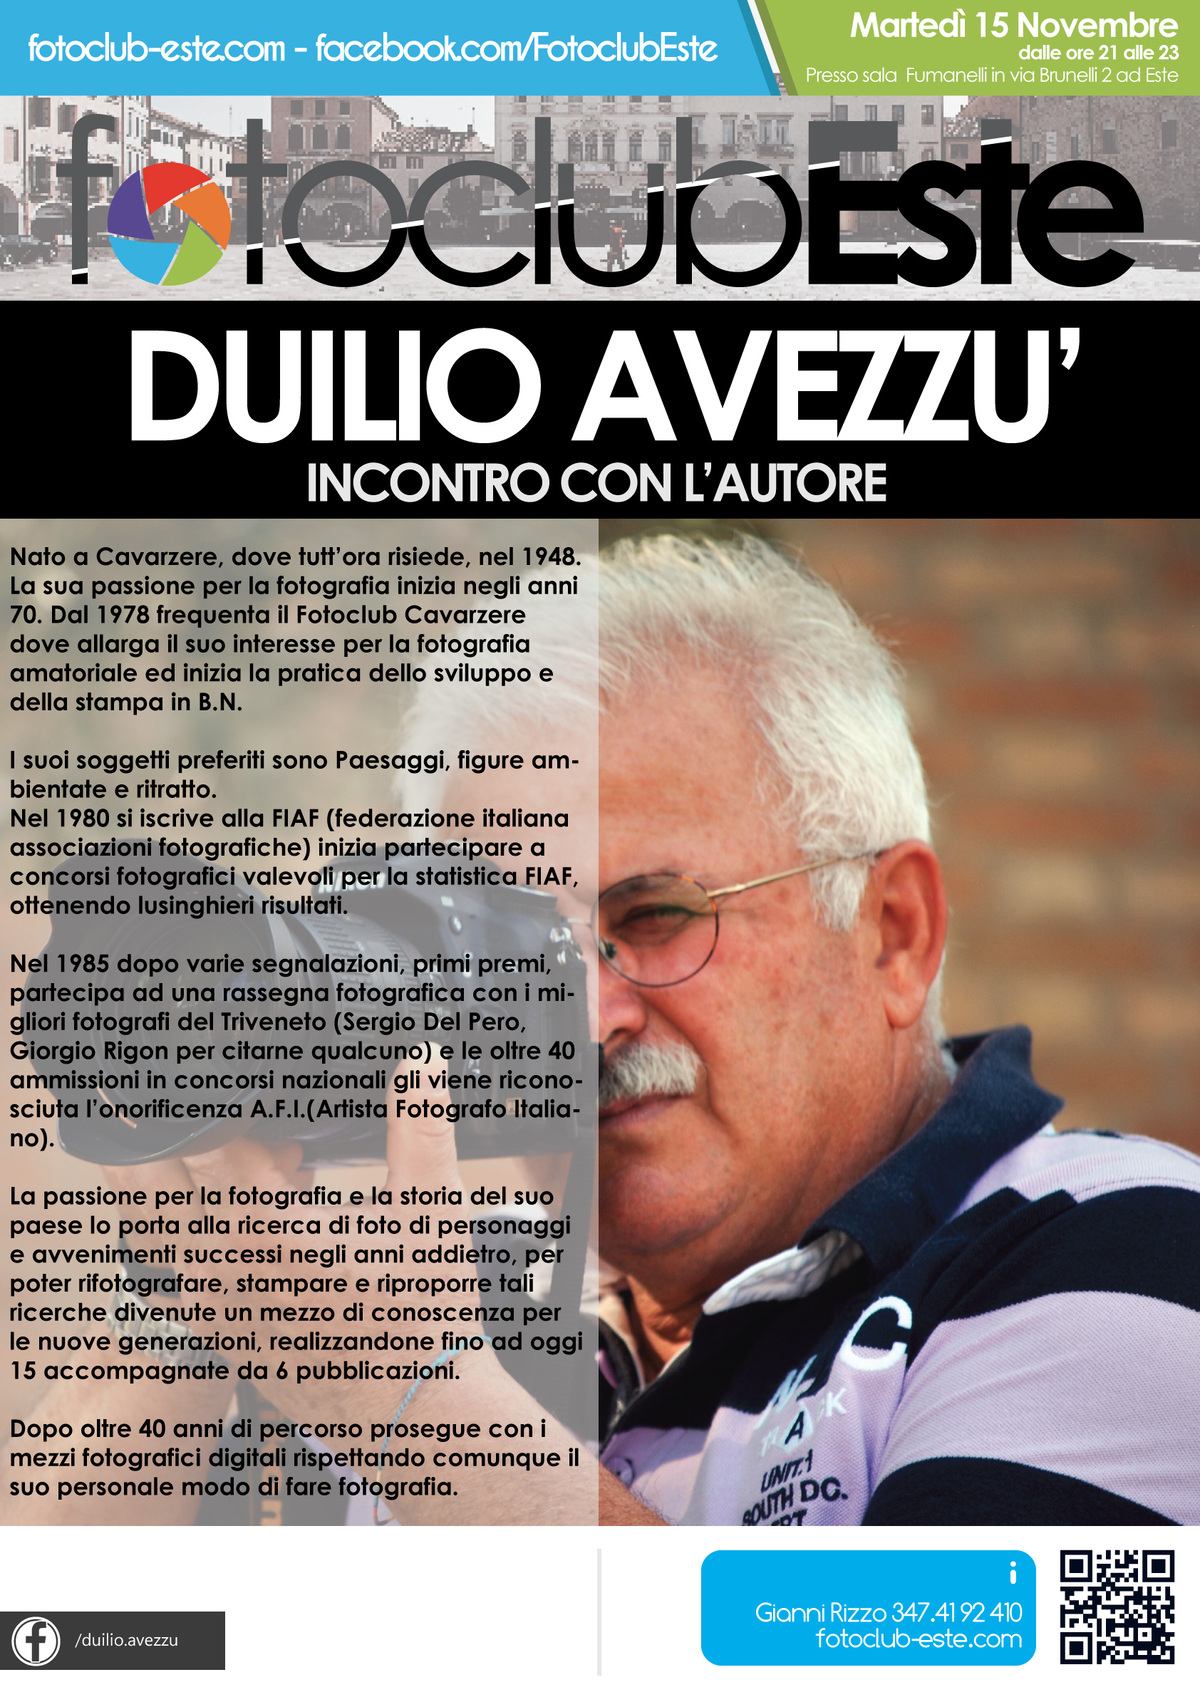 Duilio Avezzu